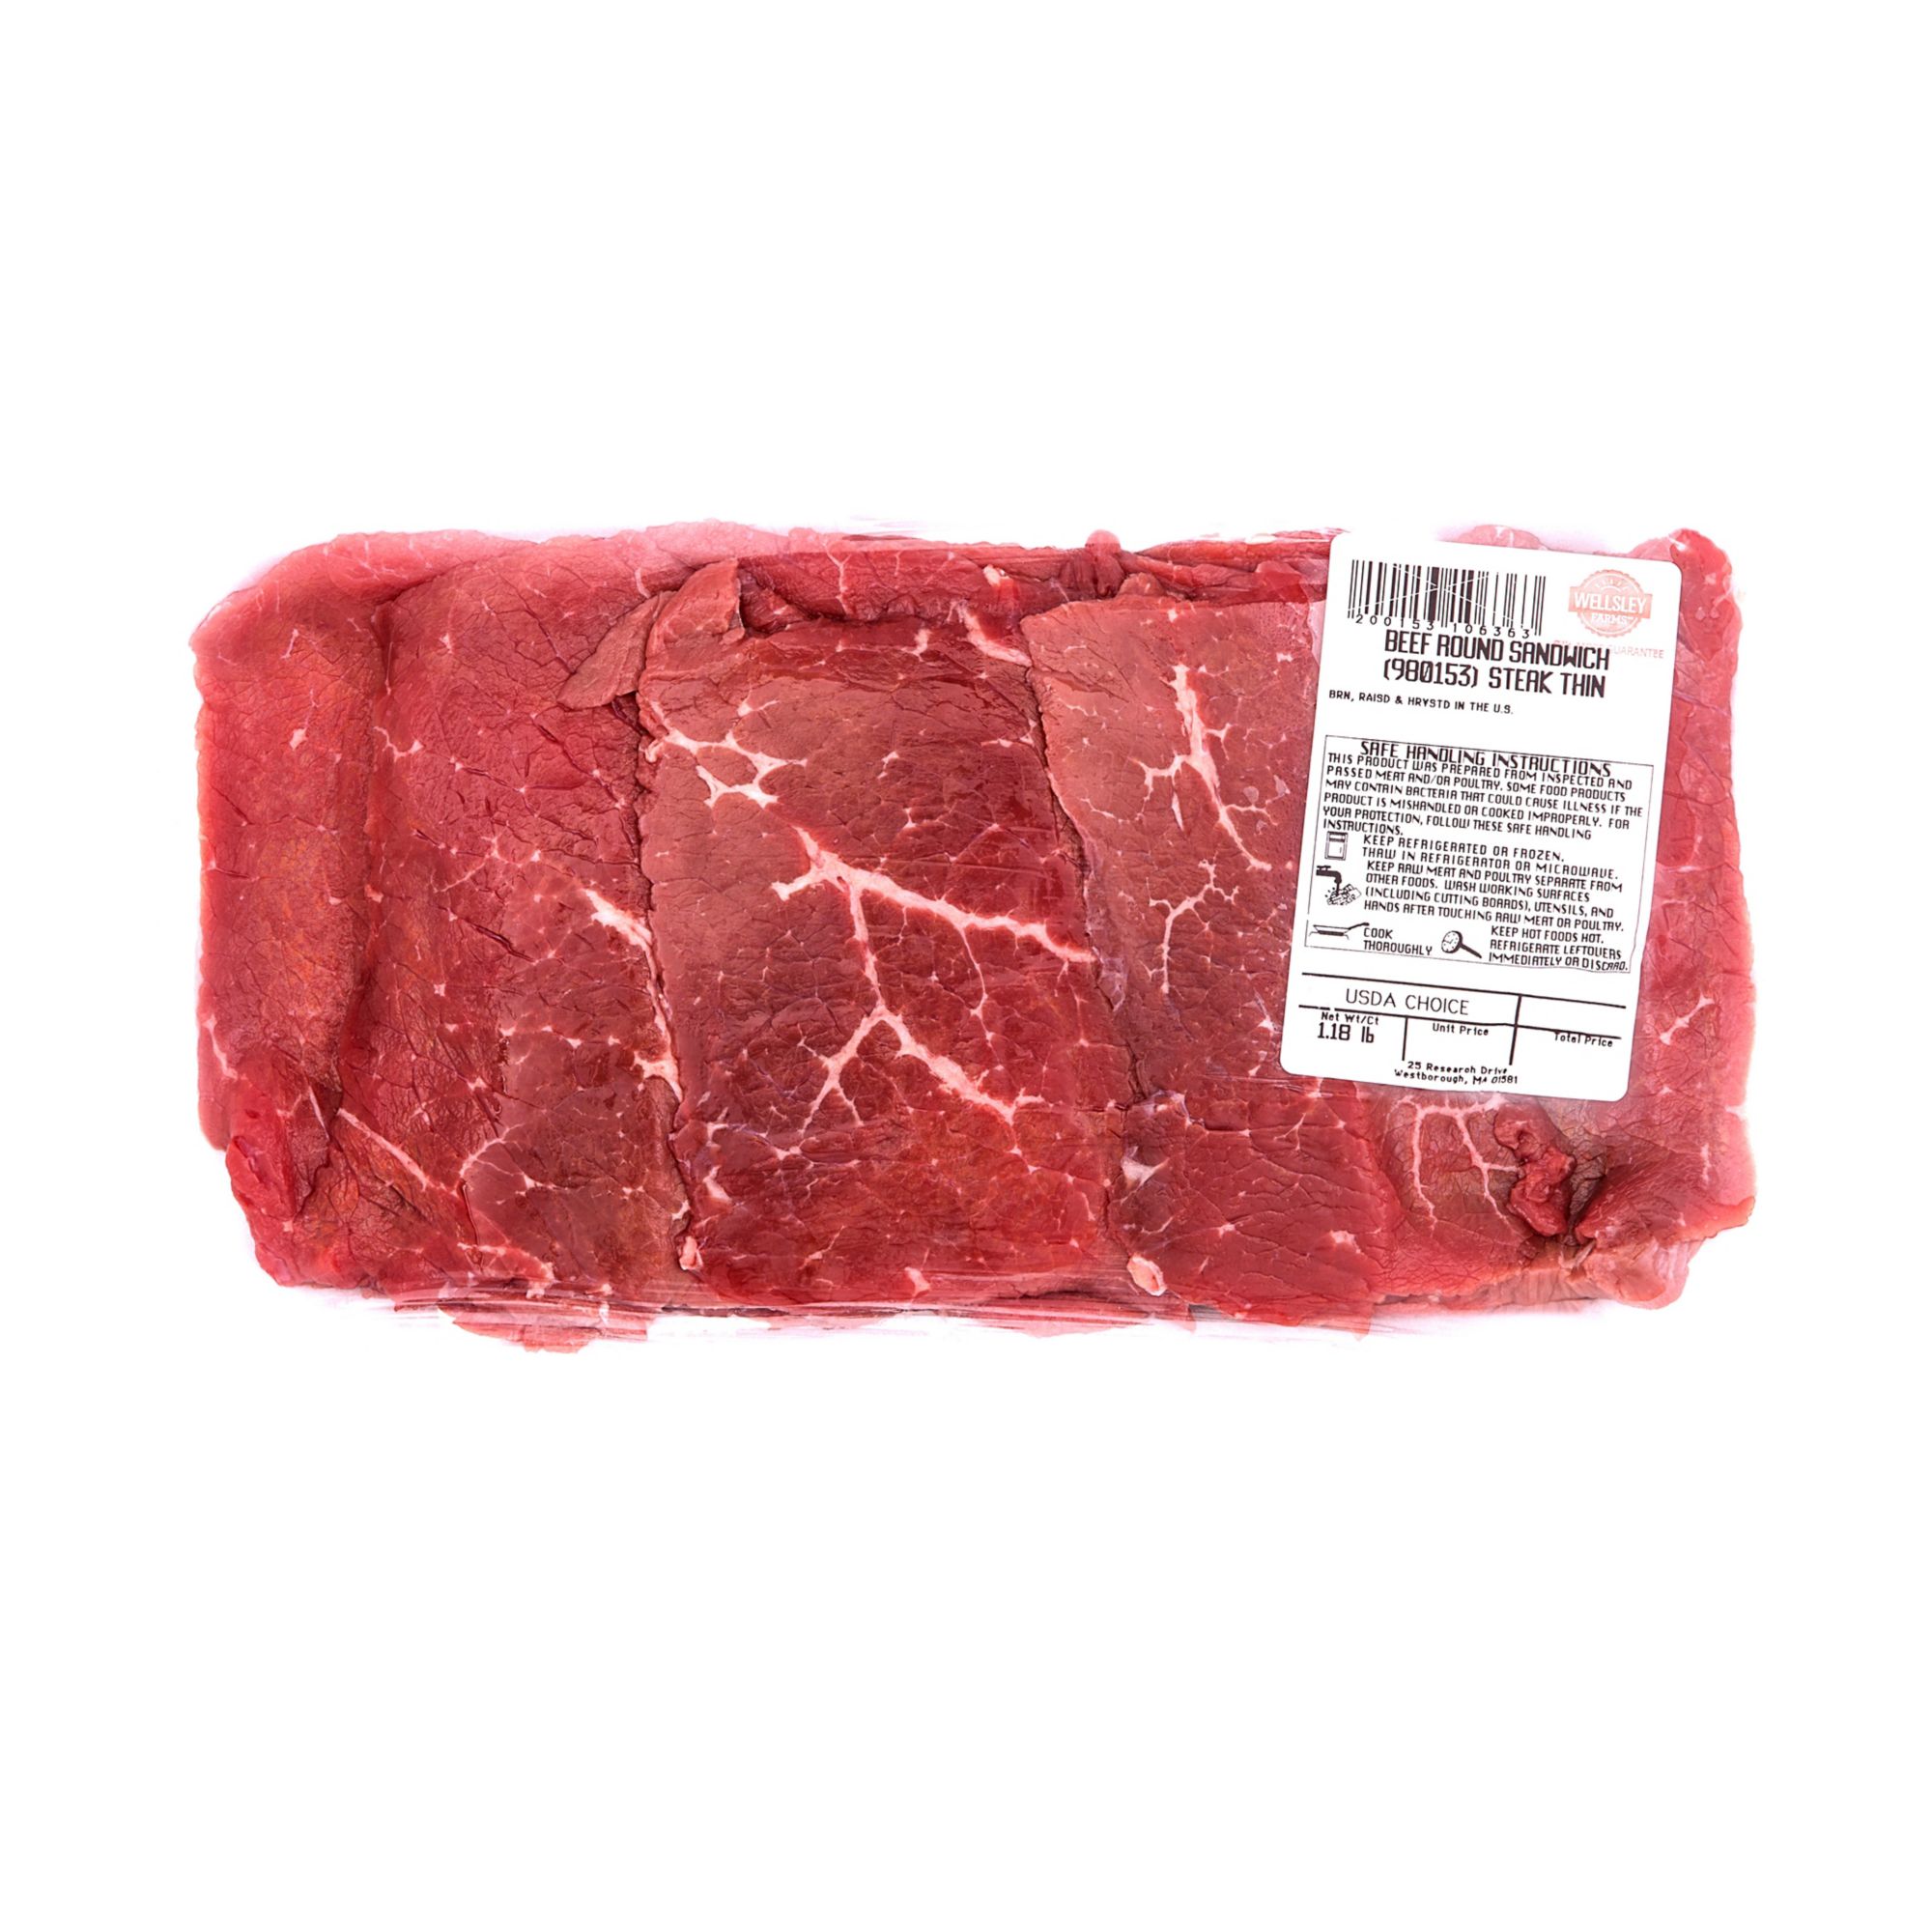 Wellsley Farms Thin Cut Sandwich Steak,  2-2.5 lb